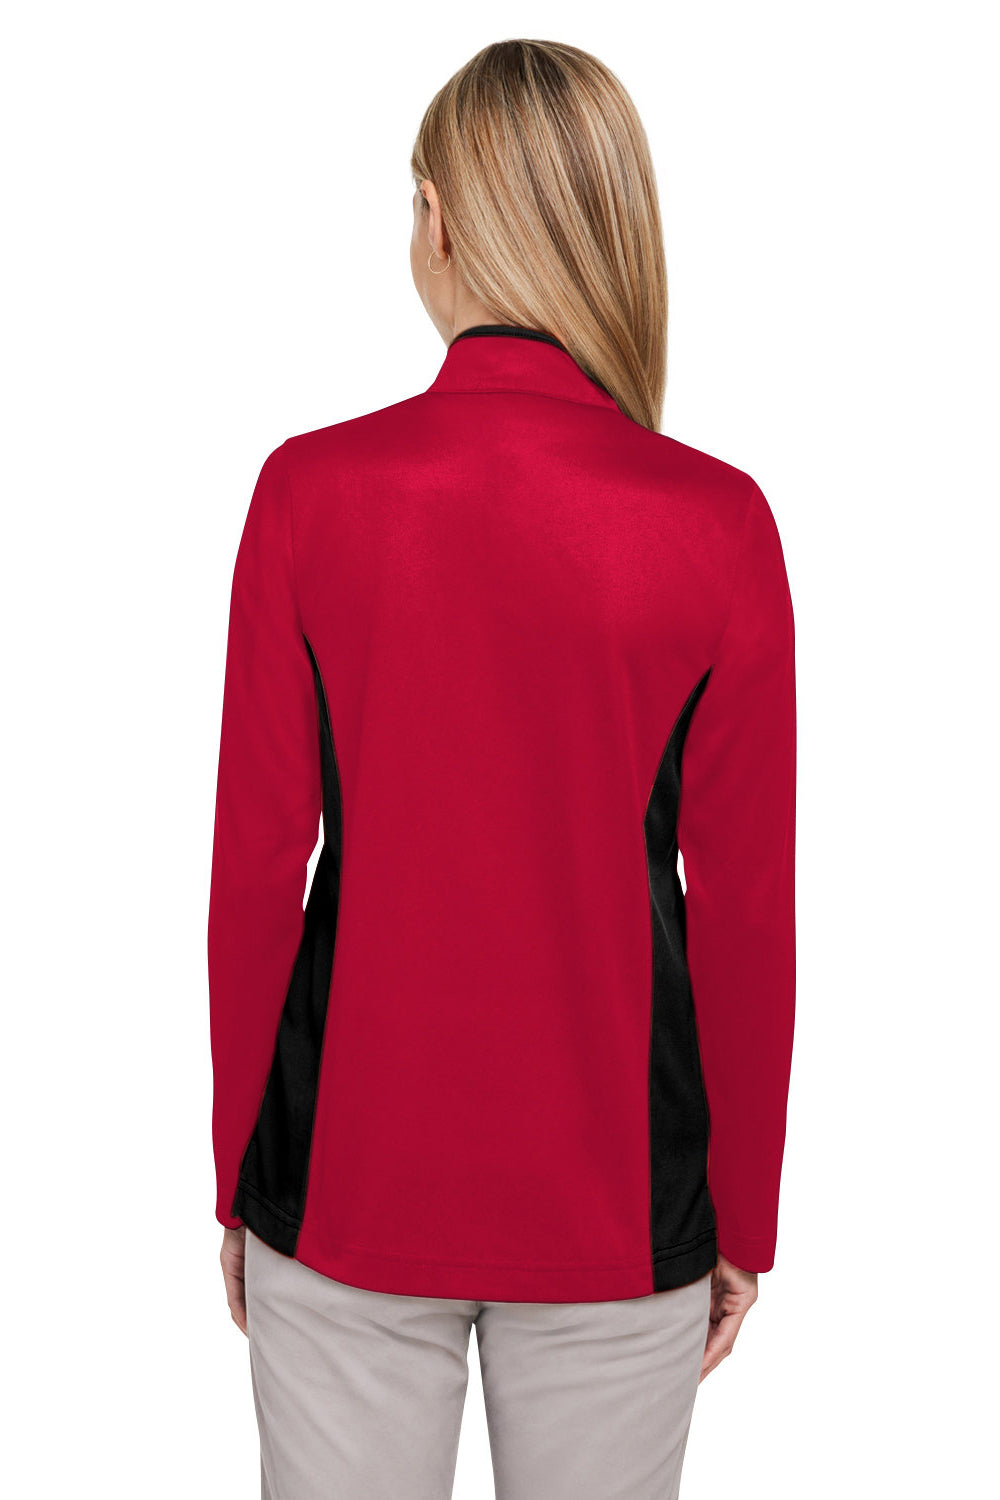 Harriton M786W Womens Flash Performance Moisture Wicking Colorblock 1/4 Zip Sweatshirt Red/Black Back